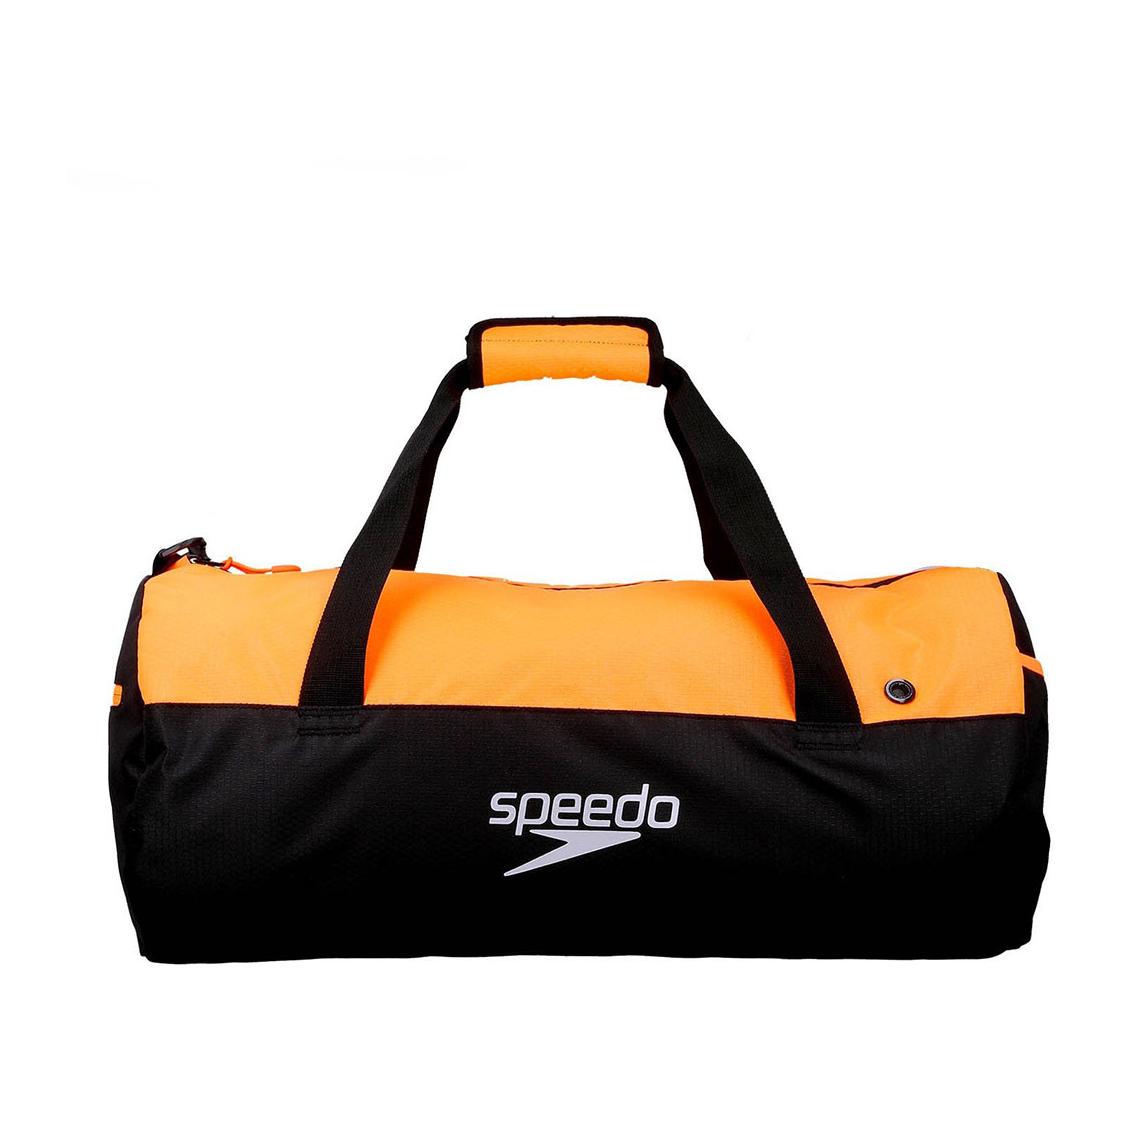 Speedo Duffel Bag Orange 